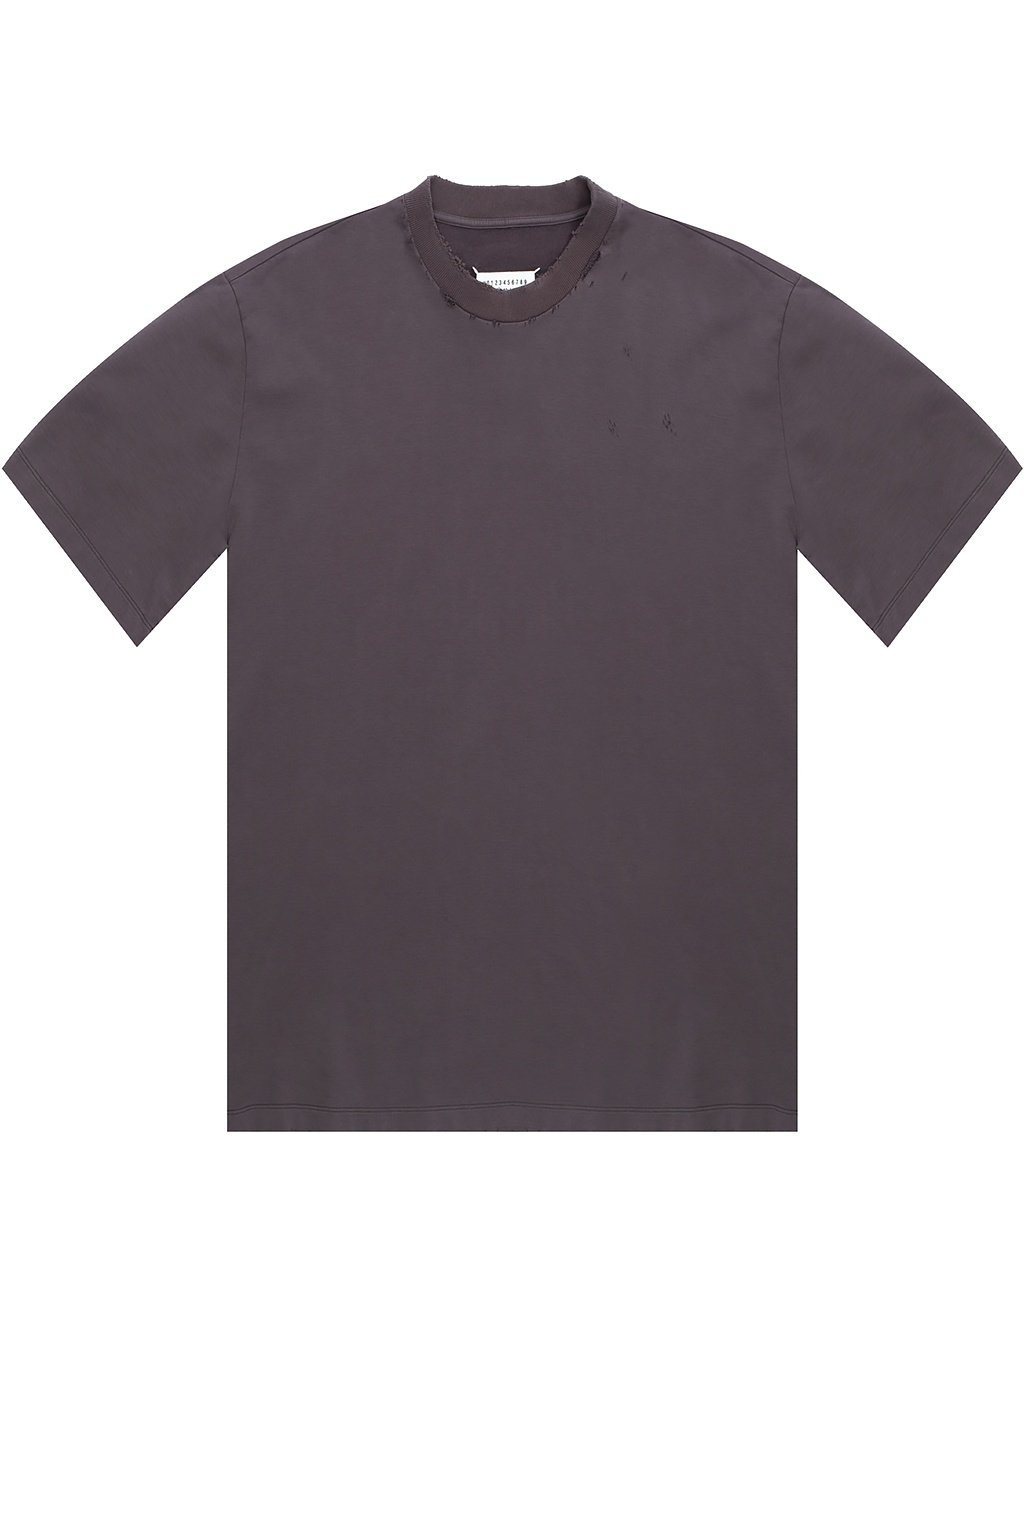 Grey Distressed T-shirt Maison Margiela - Vitkac GB